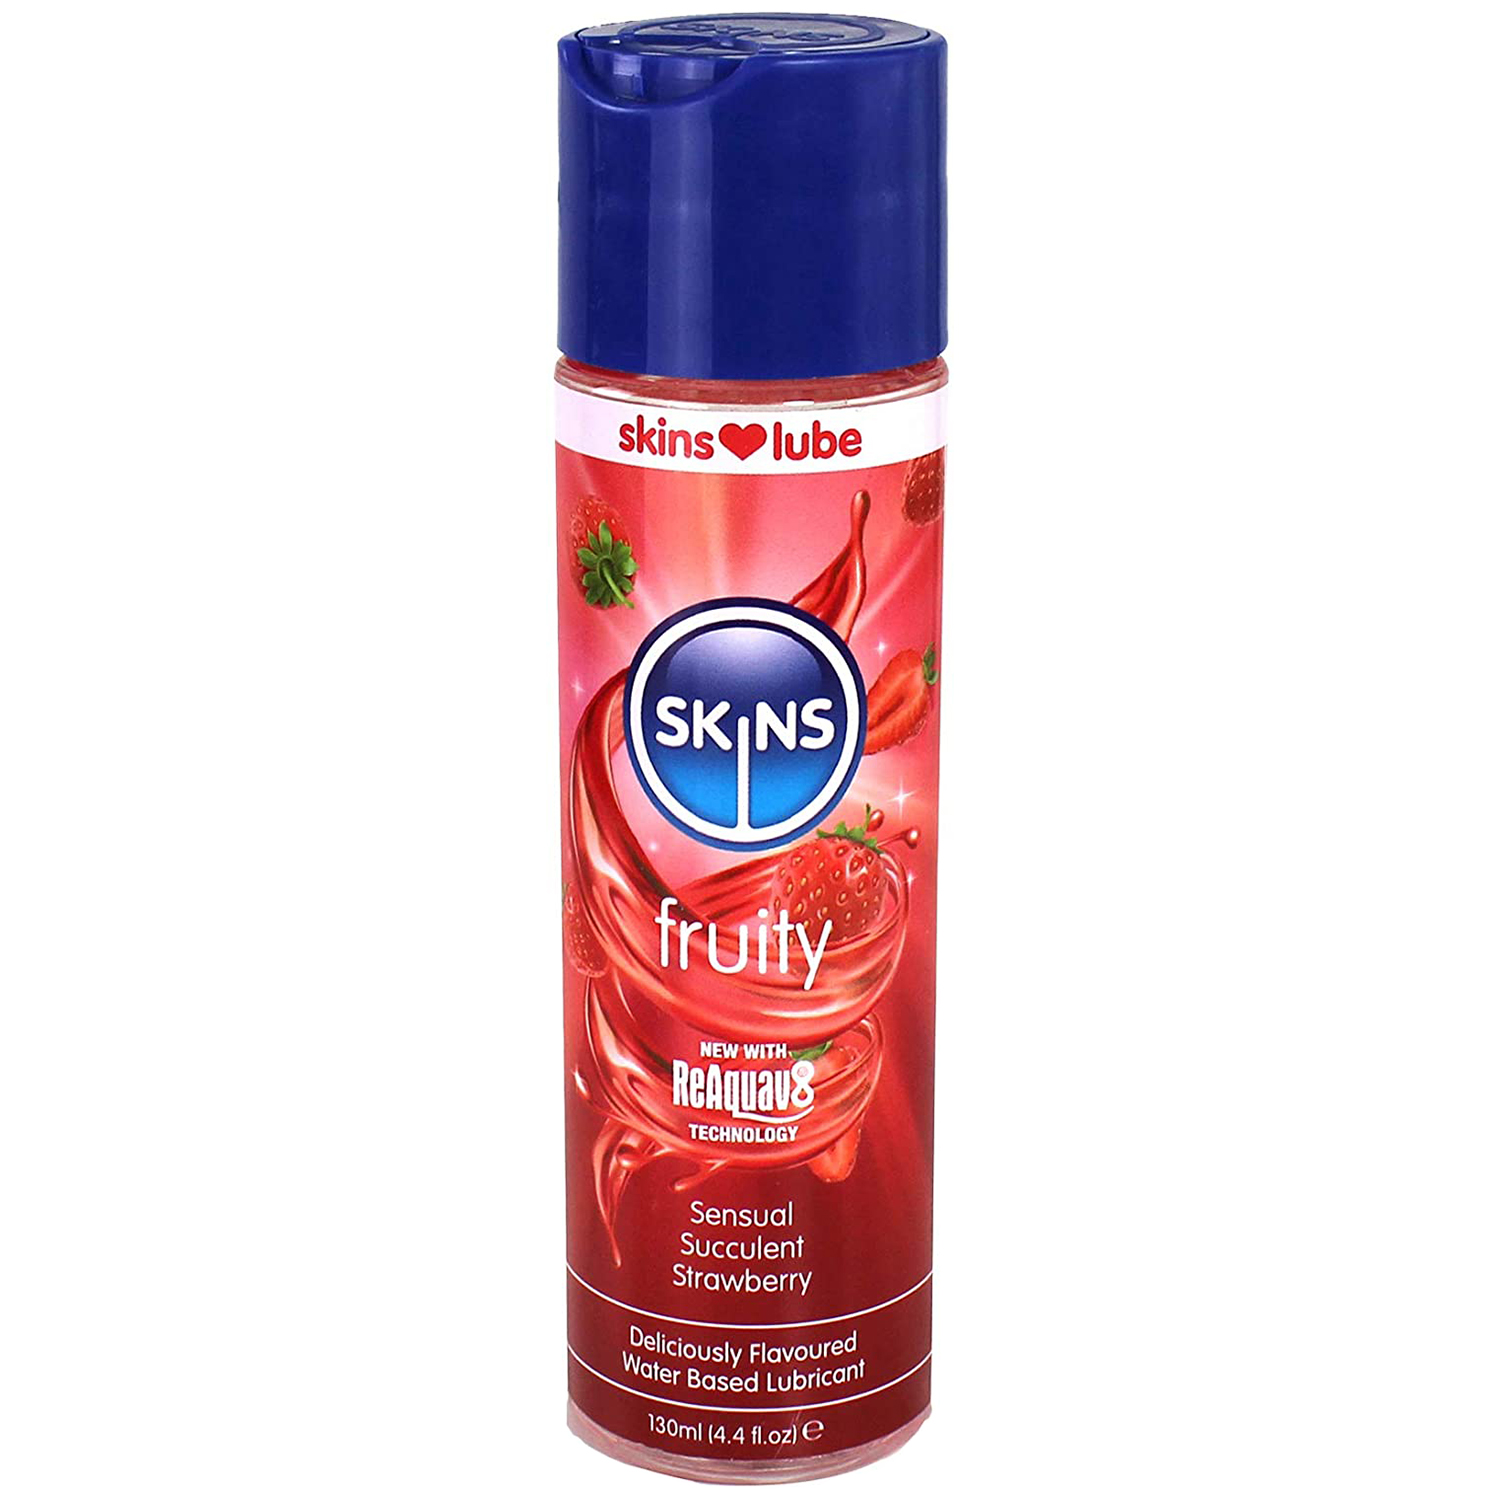 Skins Fruity Vandbaseret Glidecreme 130 ml thumbnail